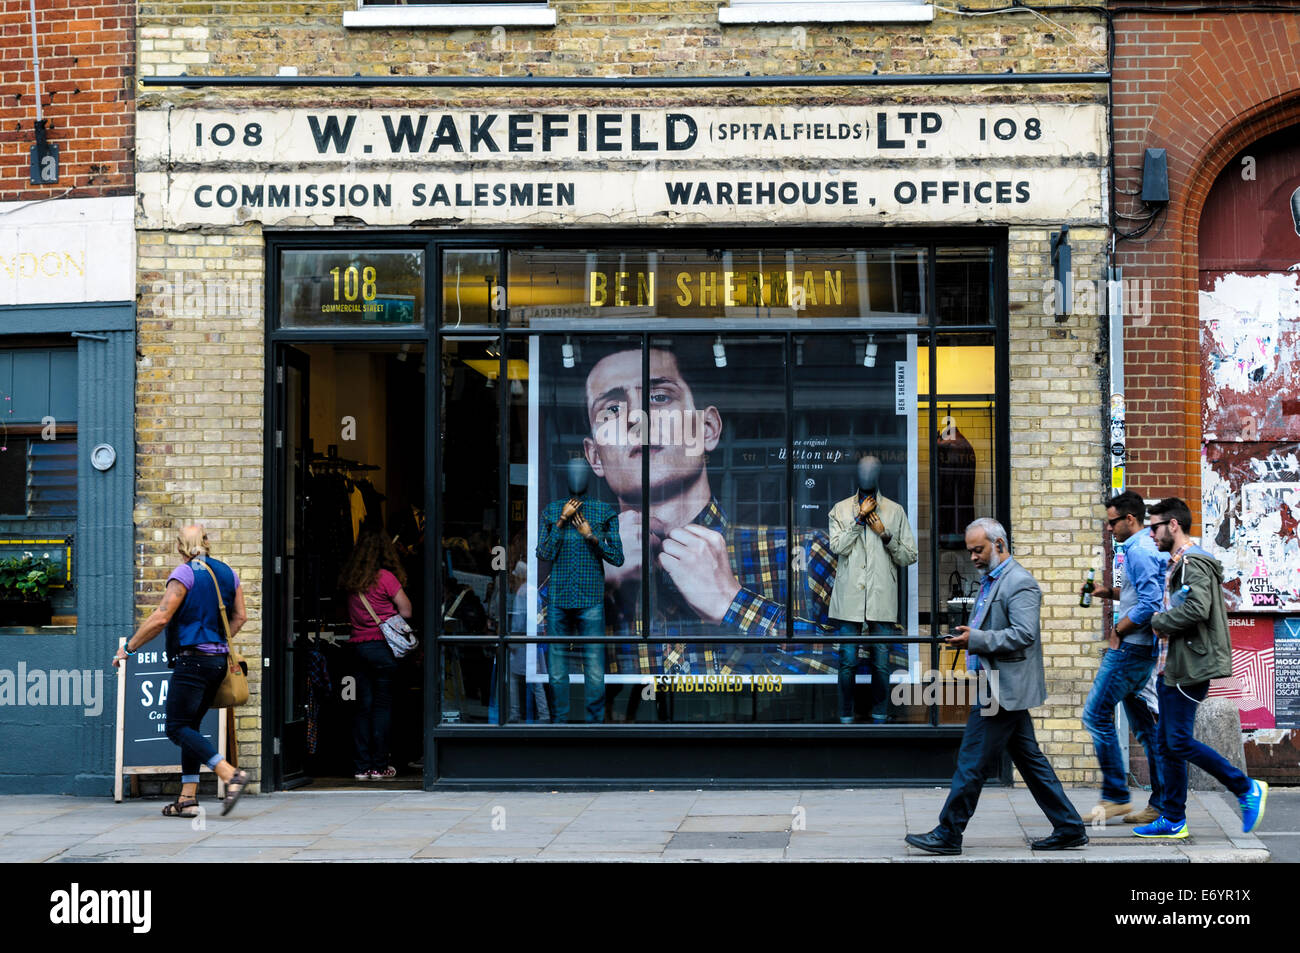 Ben Sherman Shop In Spitafields London Uk Stock Photo Alamy